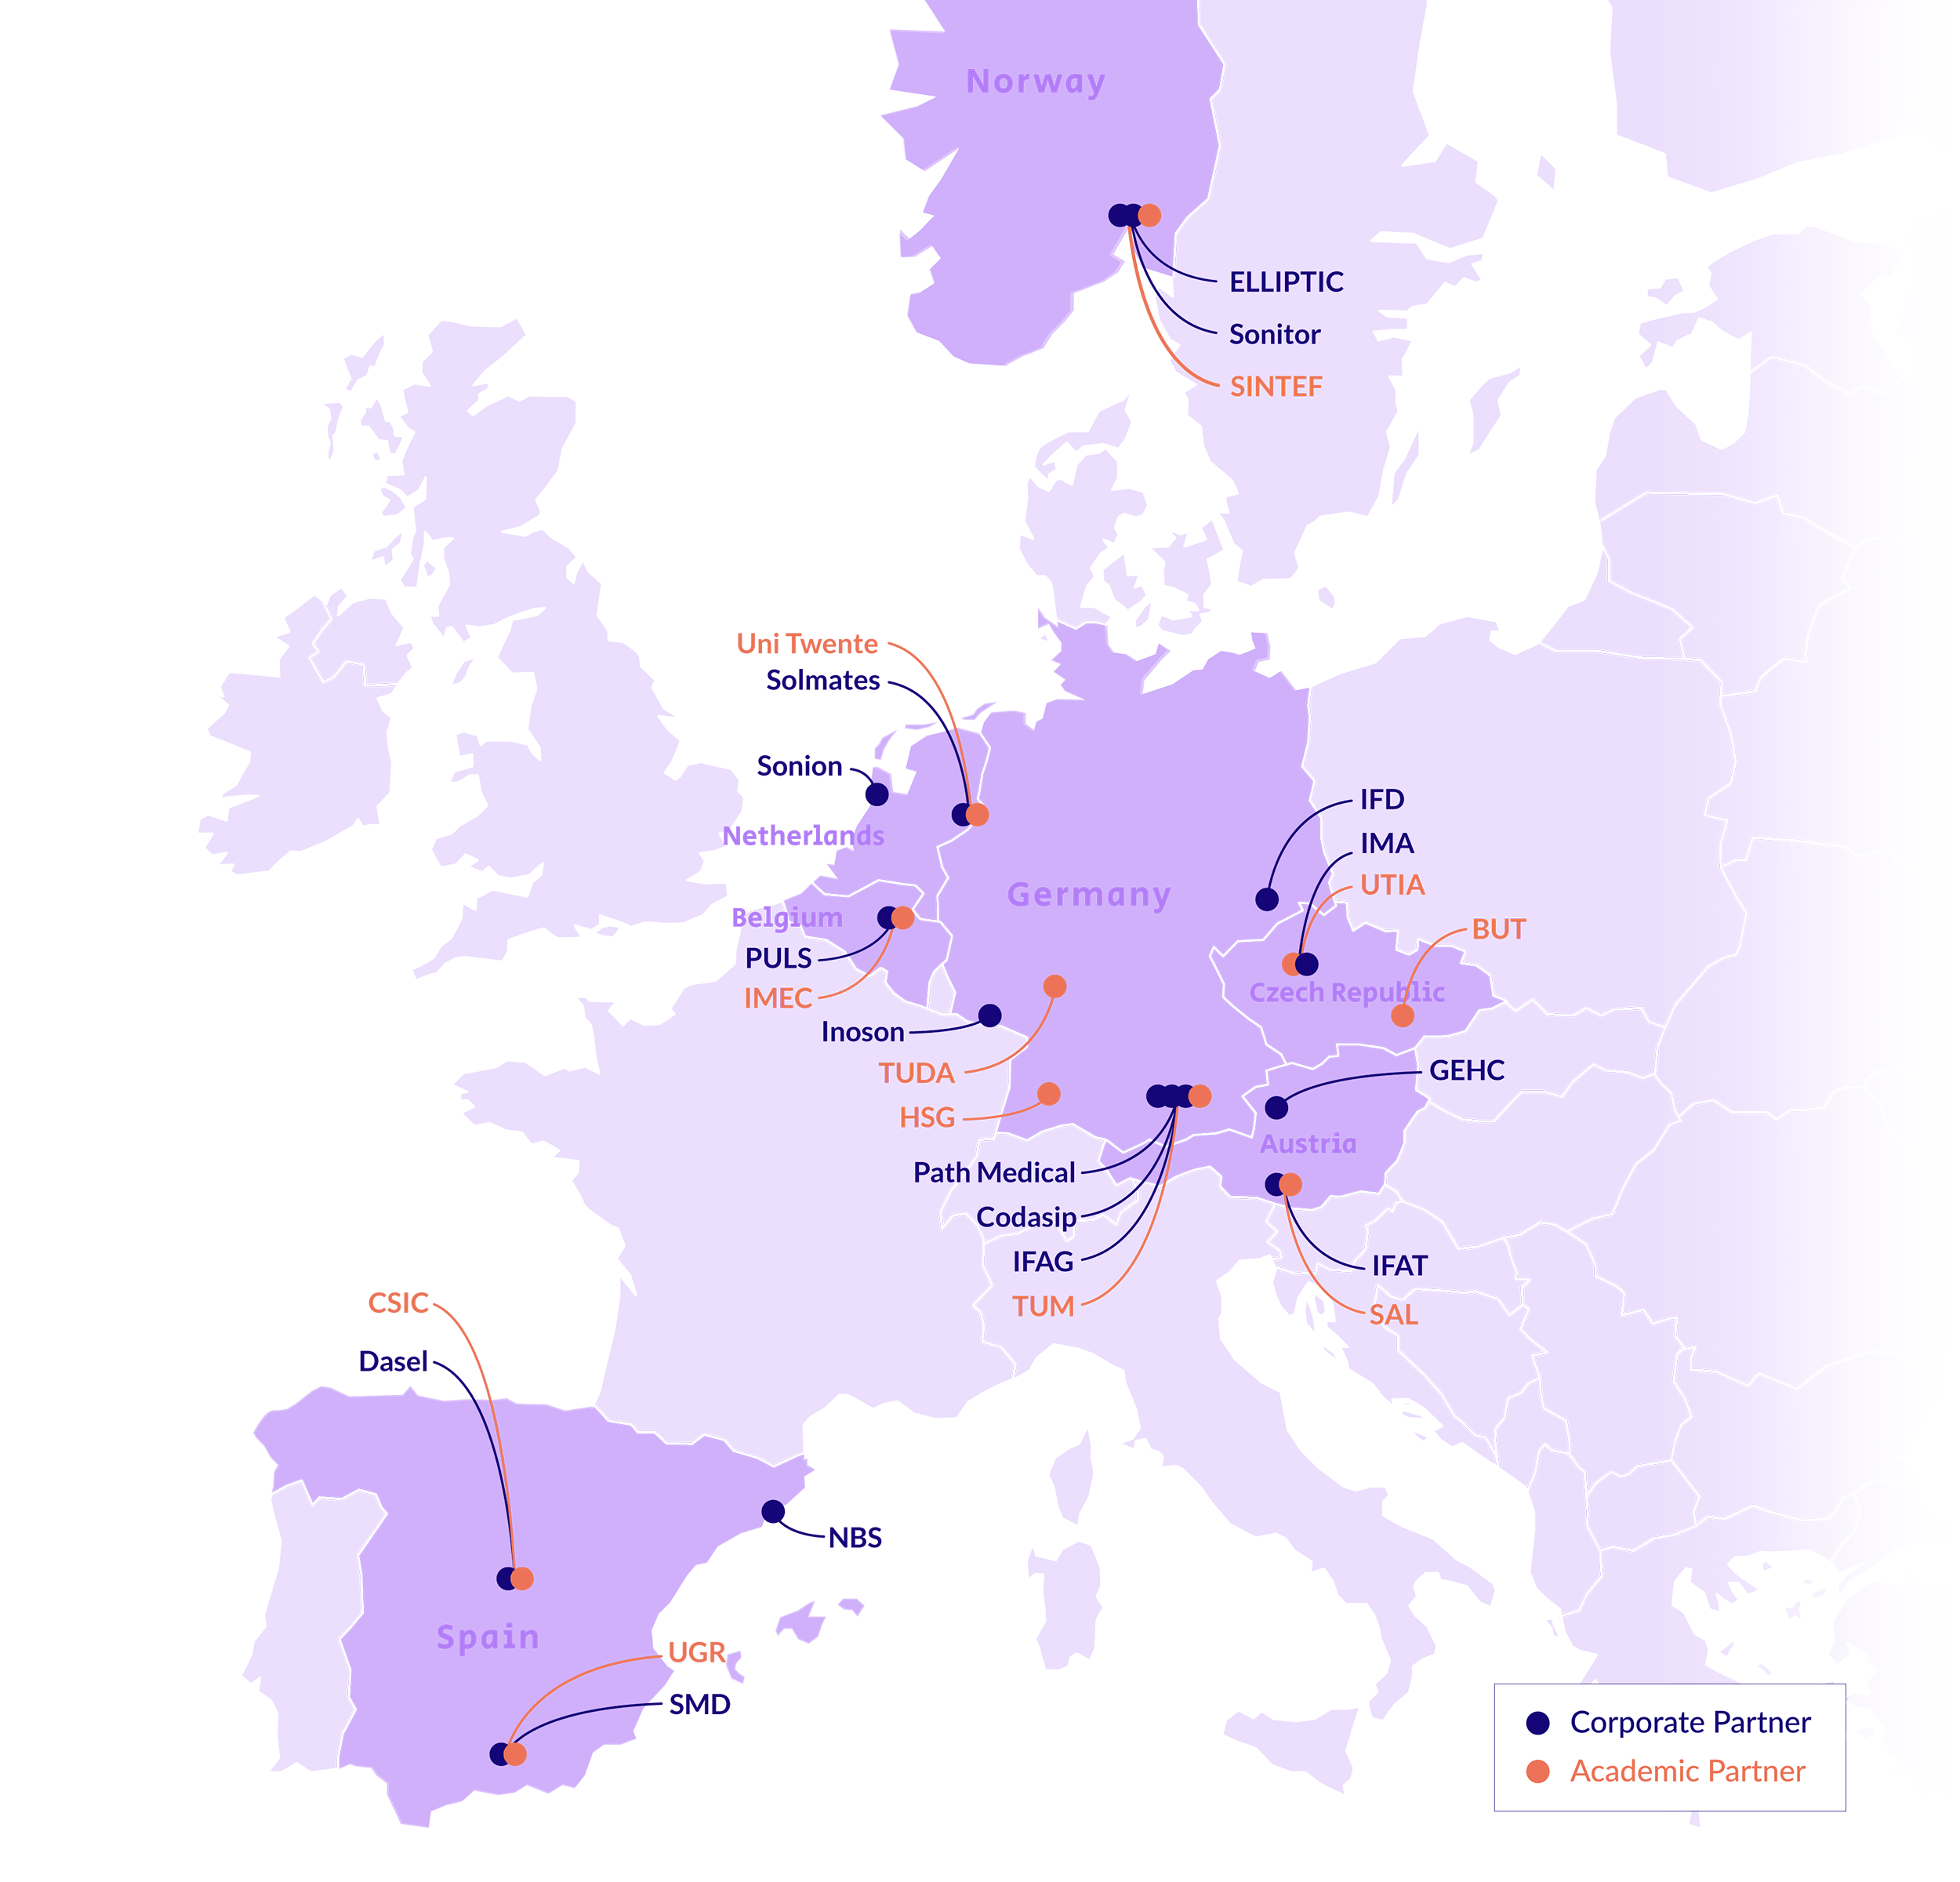 Map of consortium partners in Europe